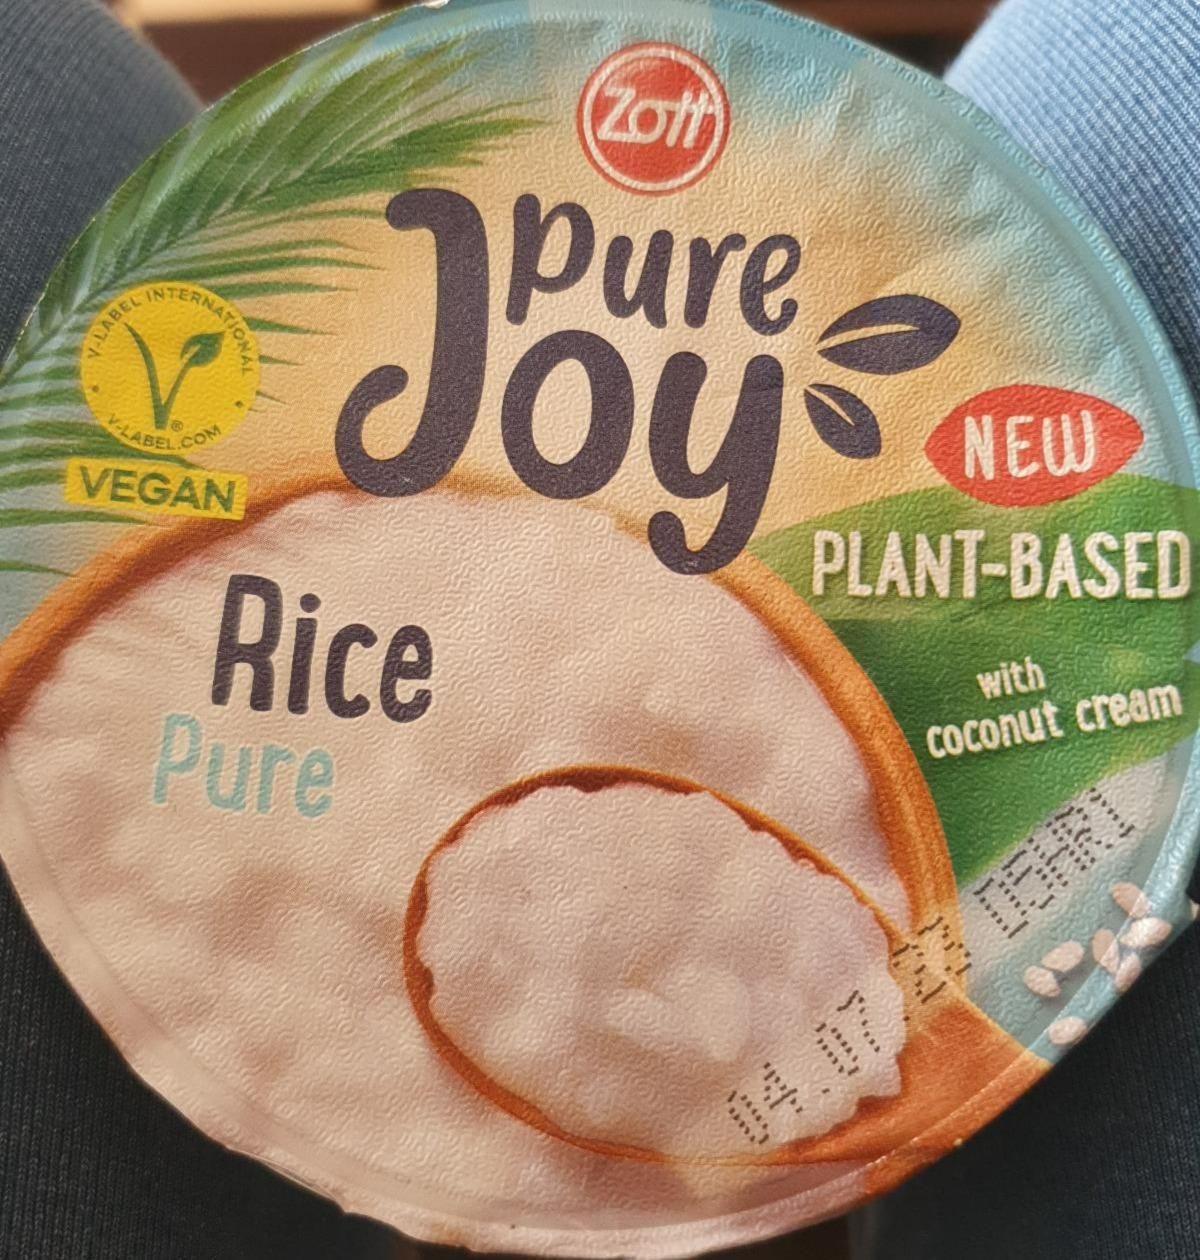 Fotografie - Pure Joy RIce Pure with coconut cream Zott